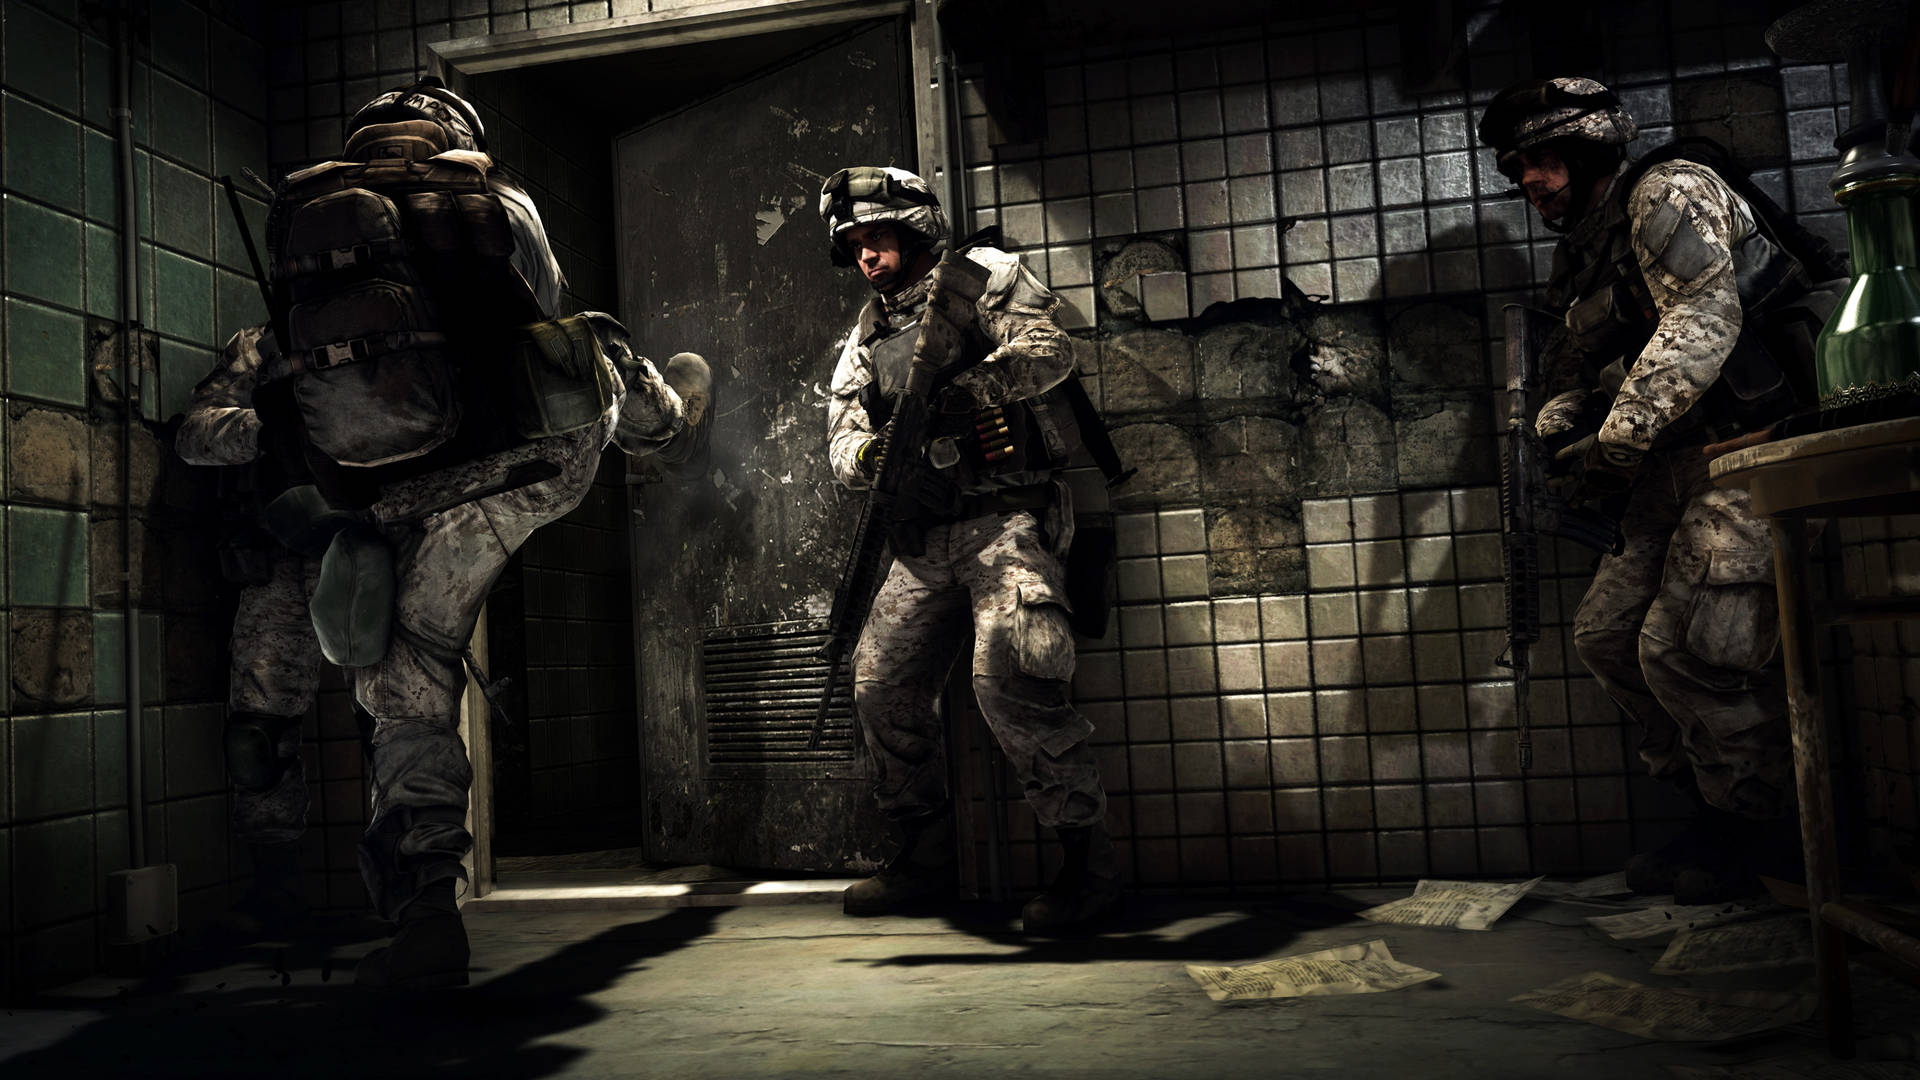 Cool Battlefield 3 Soldiers Inside Building Video Game Wallpaper